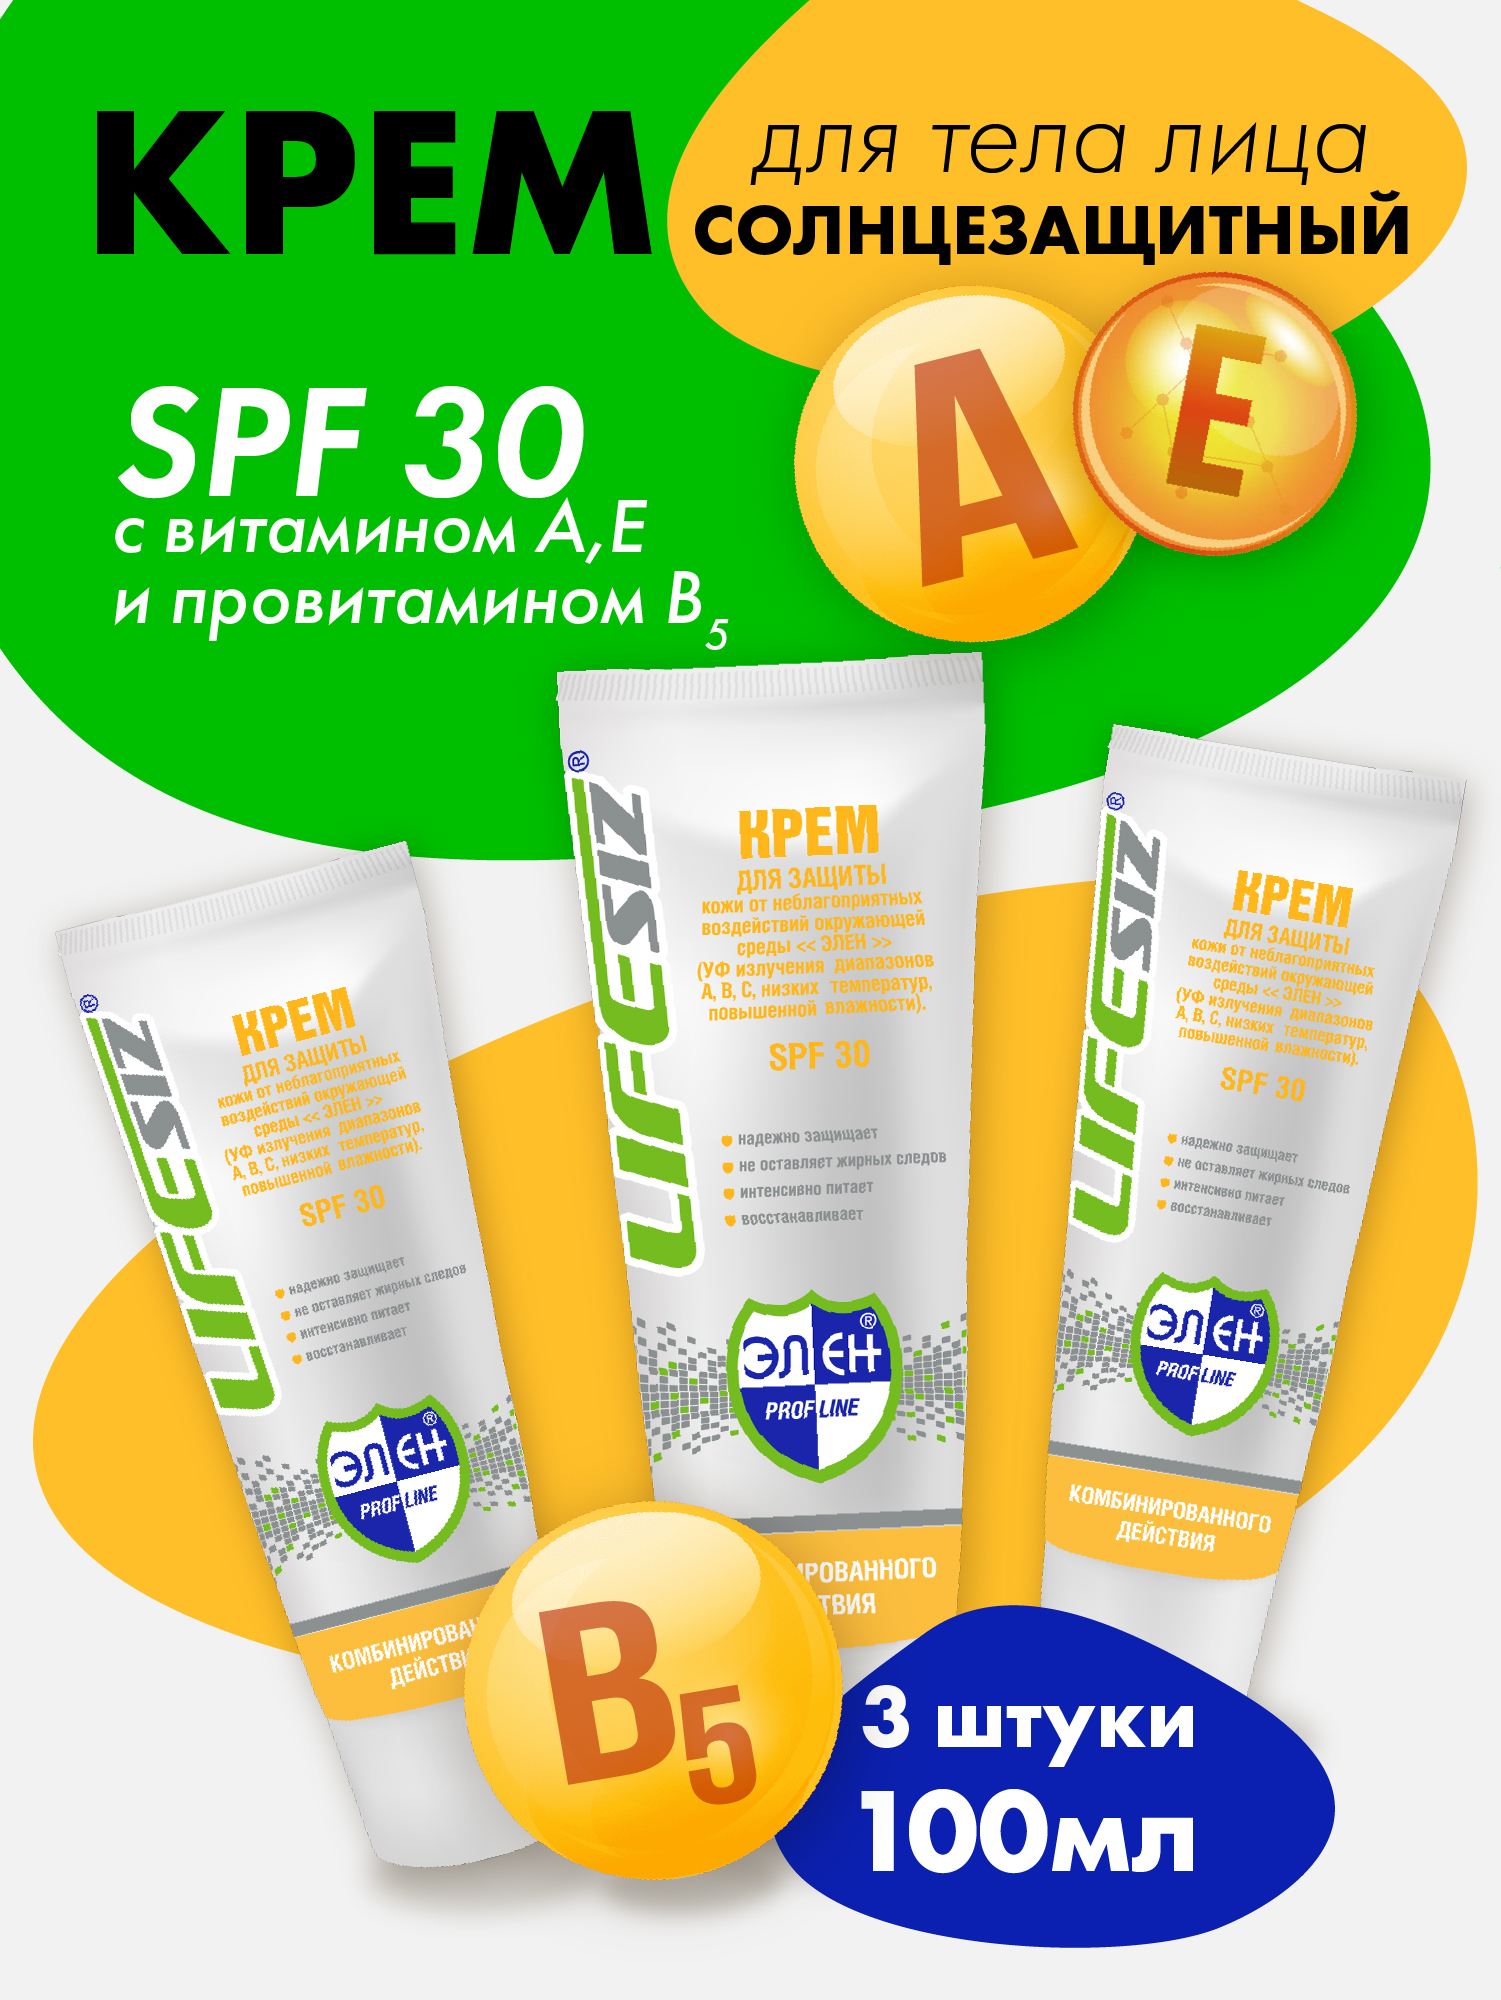 Крем защитный от солнца SPF 30 LifeSIZ Элен, от ветра и мороза 100 мл. 3 шт. защитный крем от воздействия загрязнений элен 100 мл 3 шт